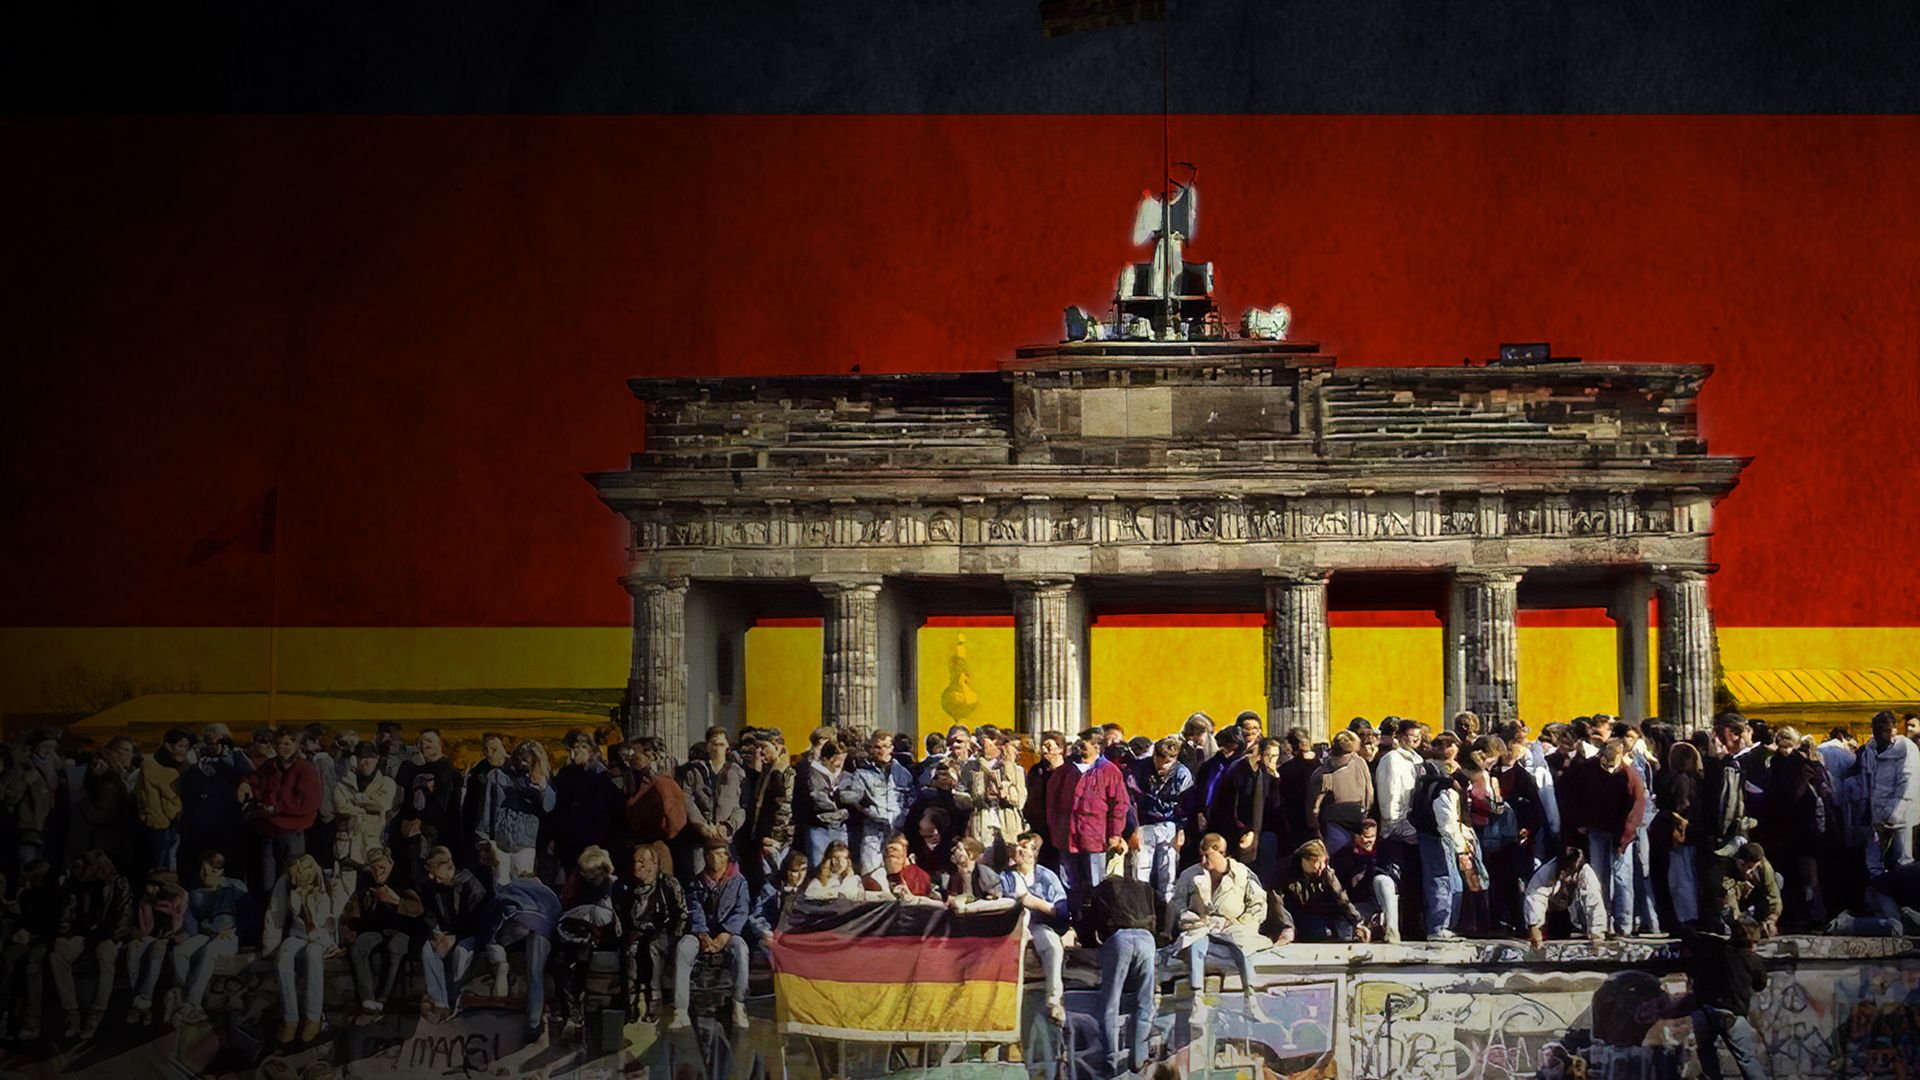 Berlin Wall: The Night the Iron Curtain Closed